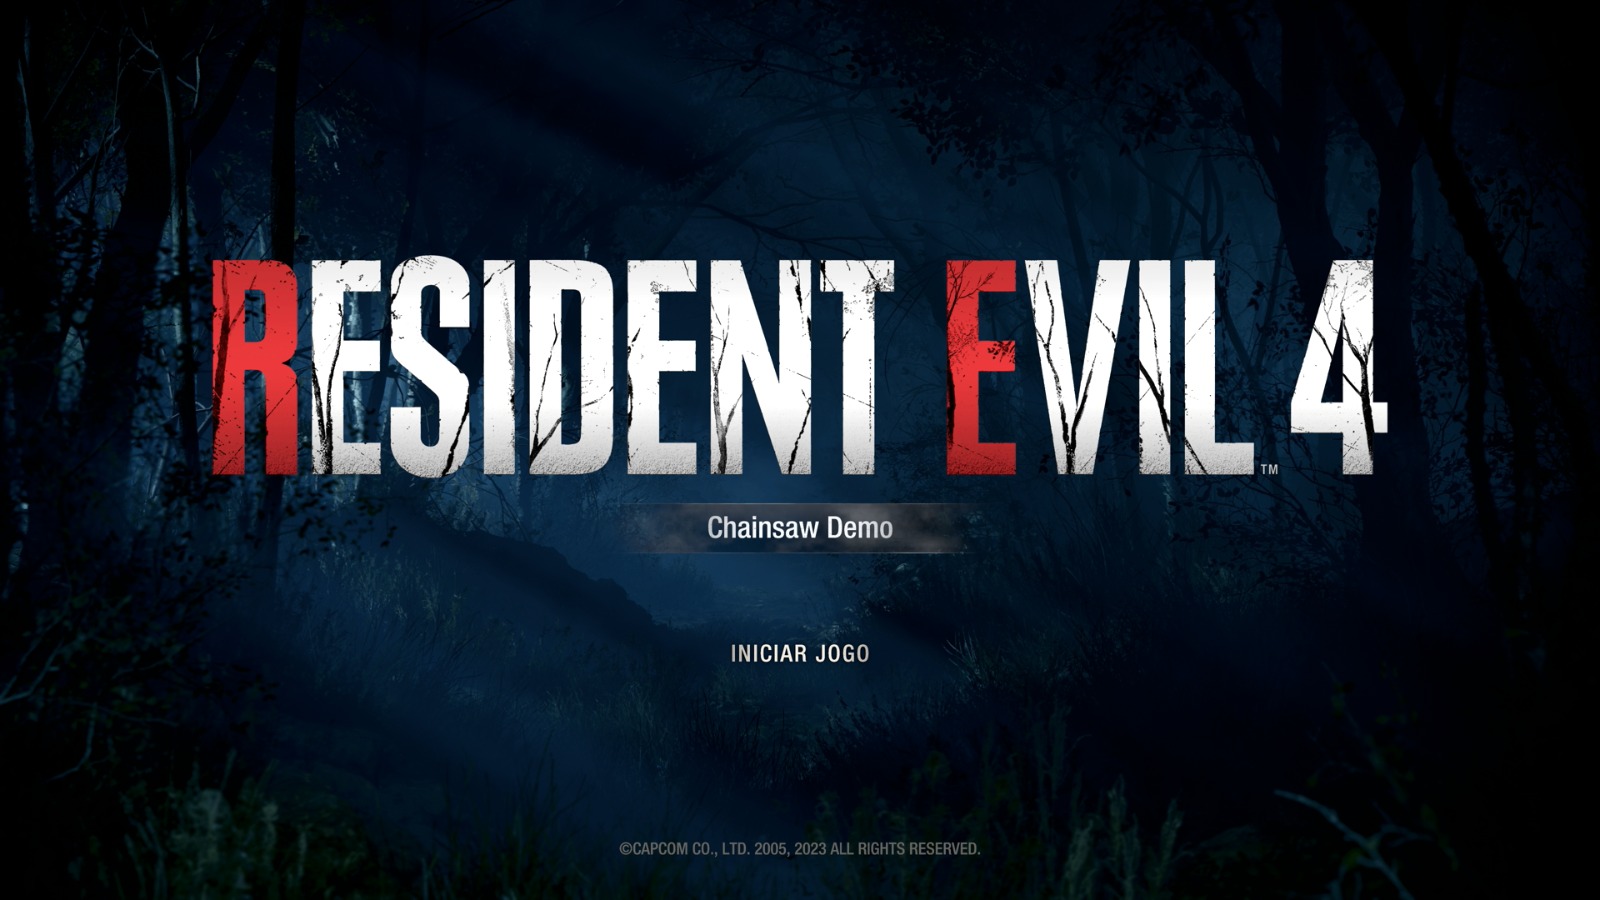 Filme Resident Evil: Death Island (Ilha da Morte) já está disponível para  ser baixado no Brasil - REVIL